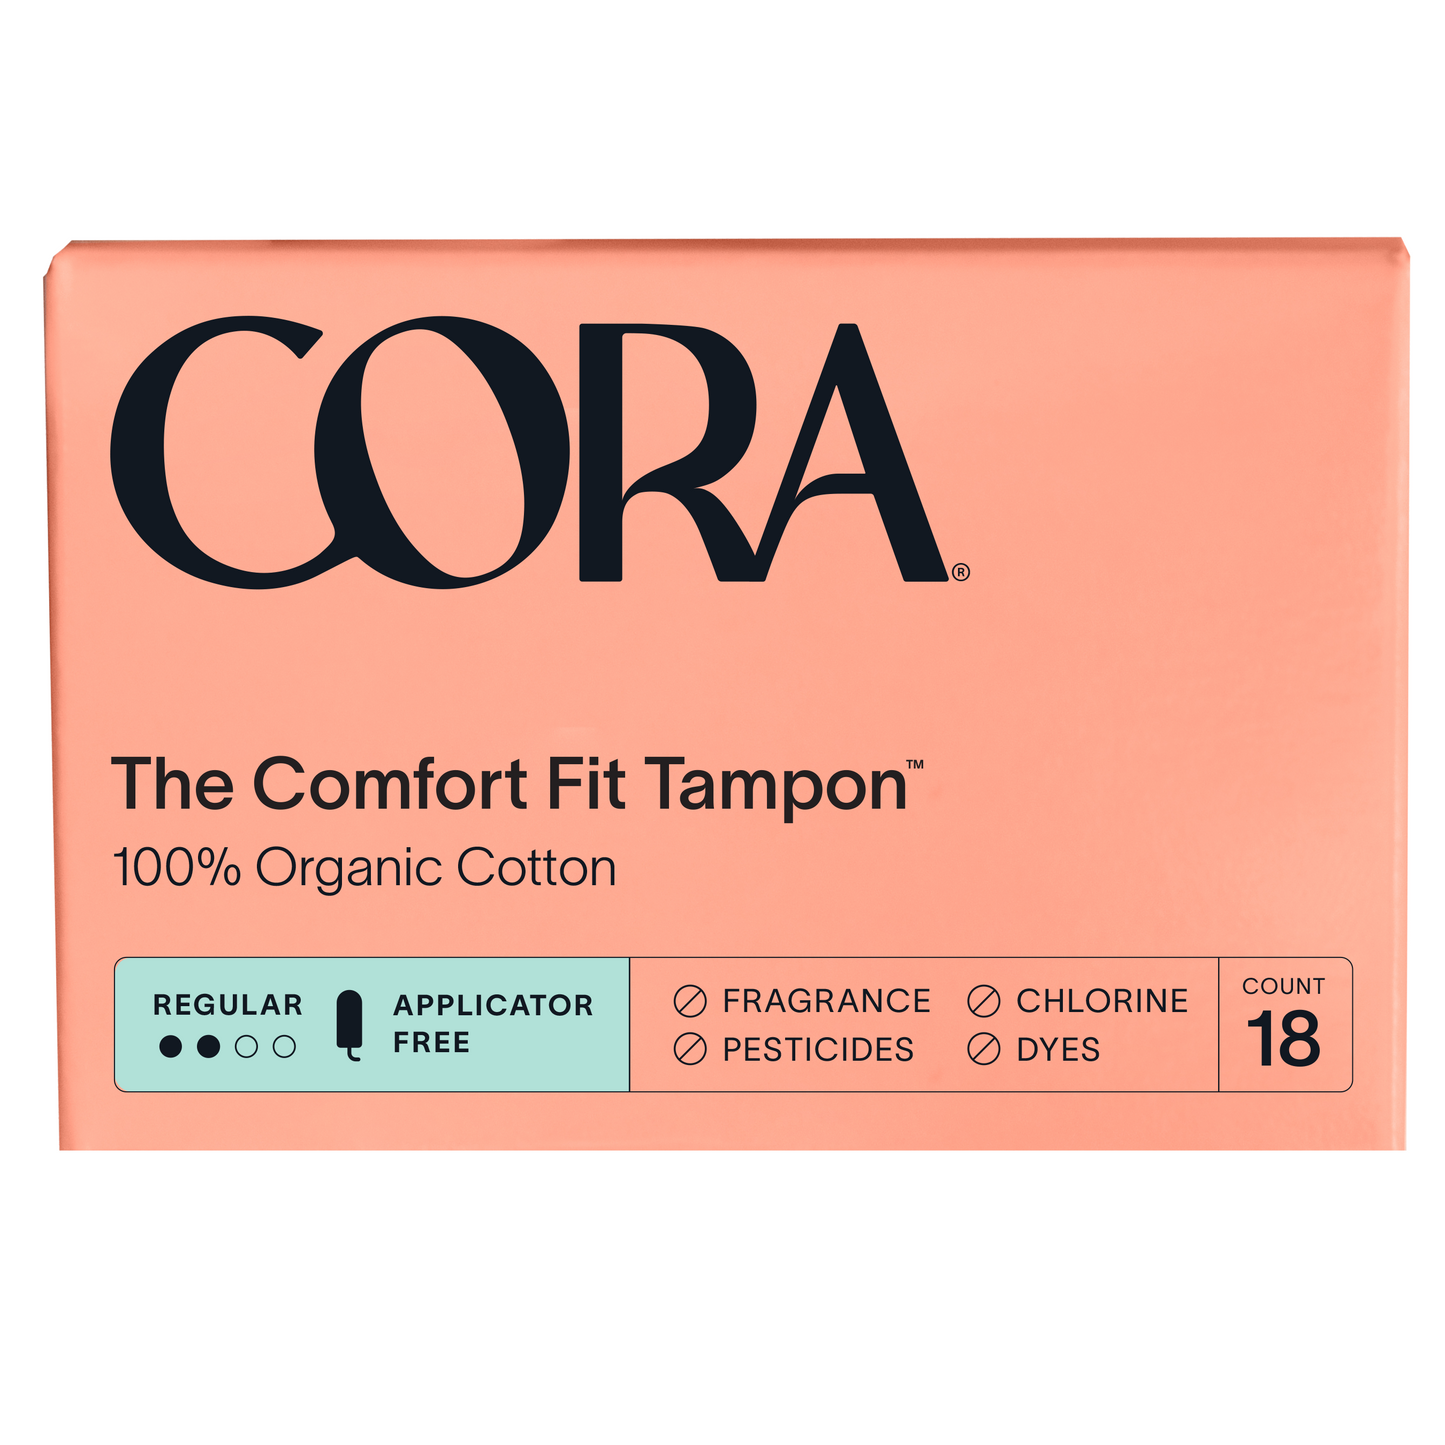 Cora Organic Cotton Ultra Thin Regular Fragrance Free Pads With